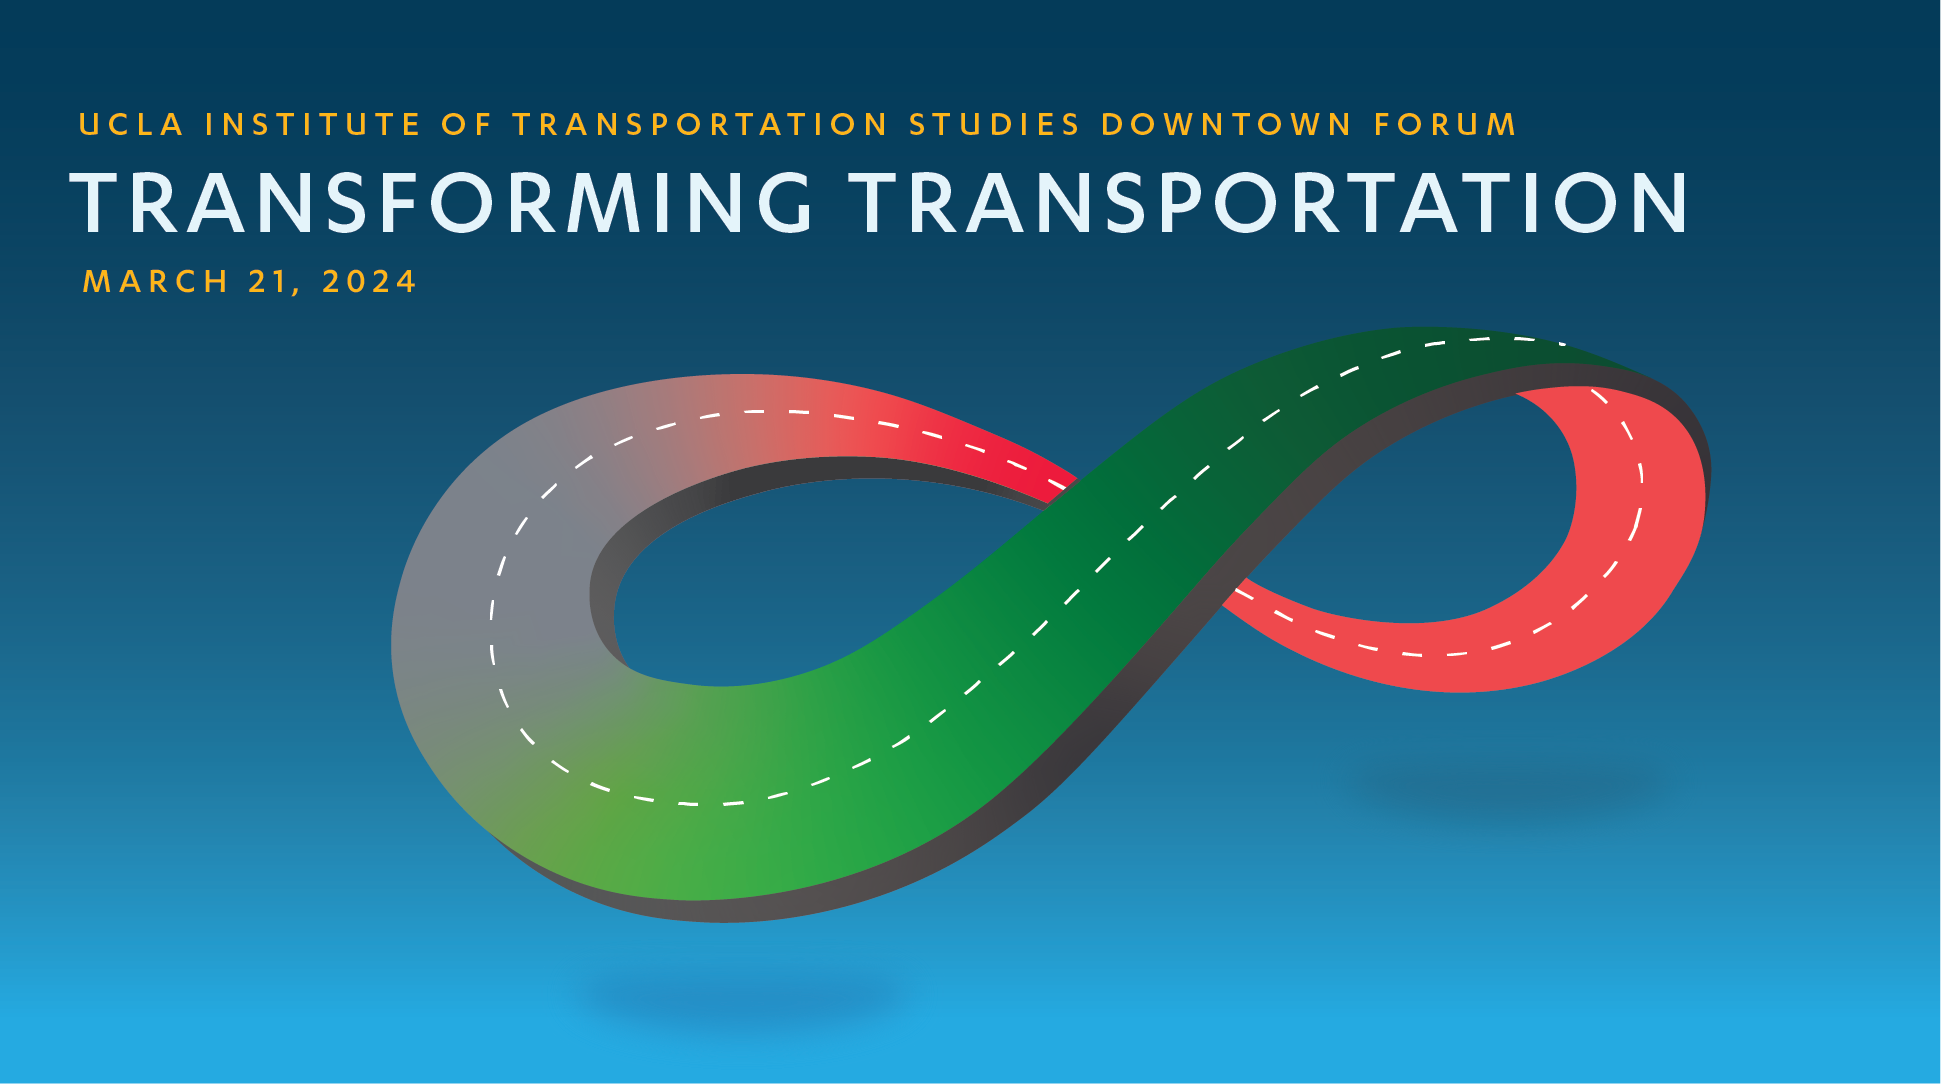 UCLA ITS Downtown Forum: Transforming Transportation